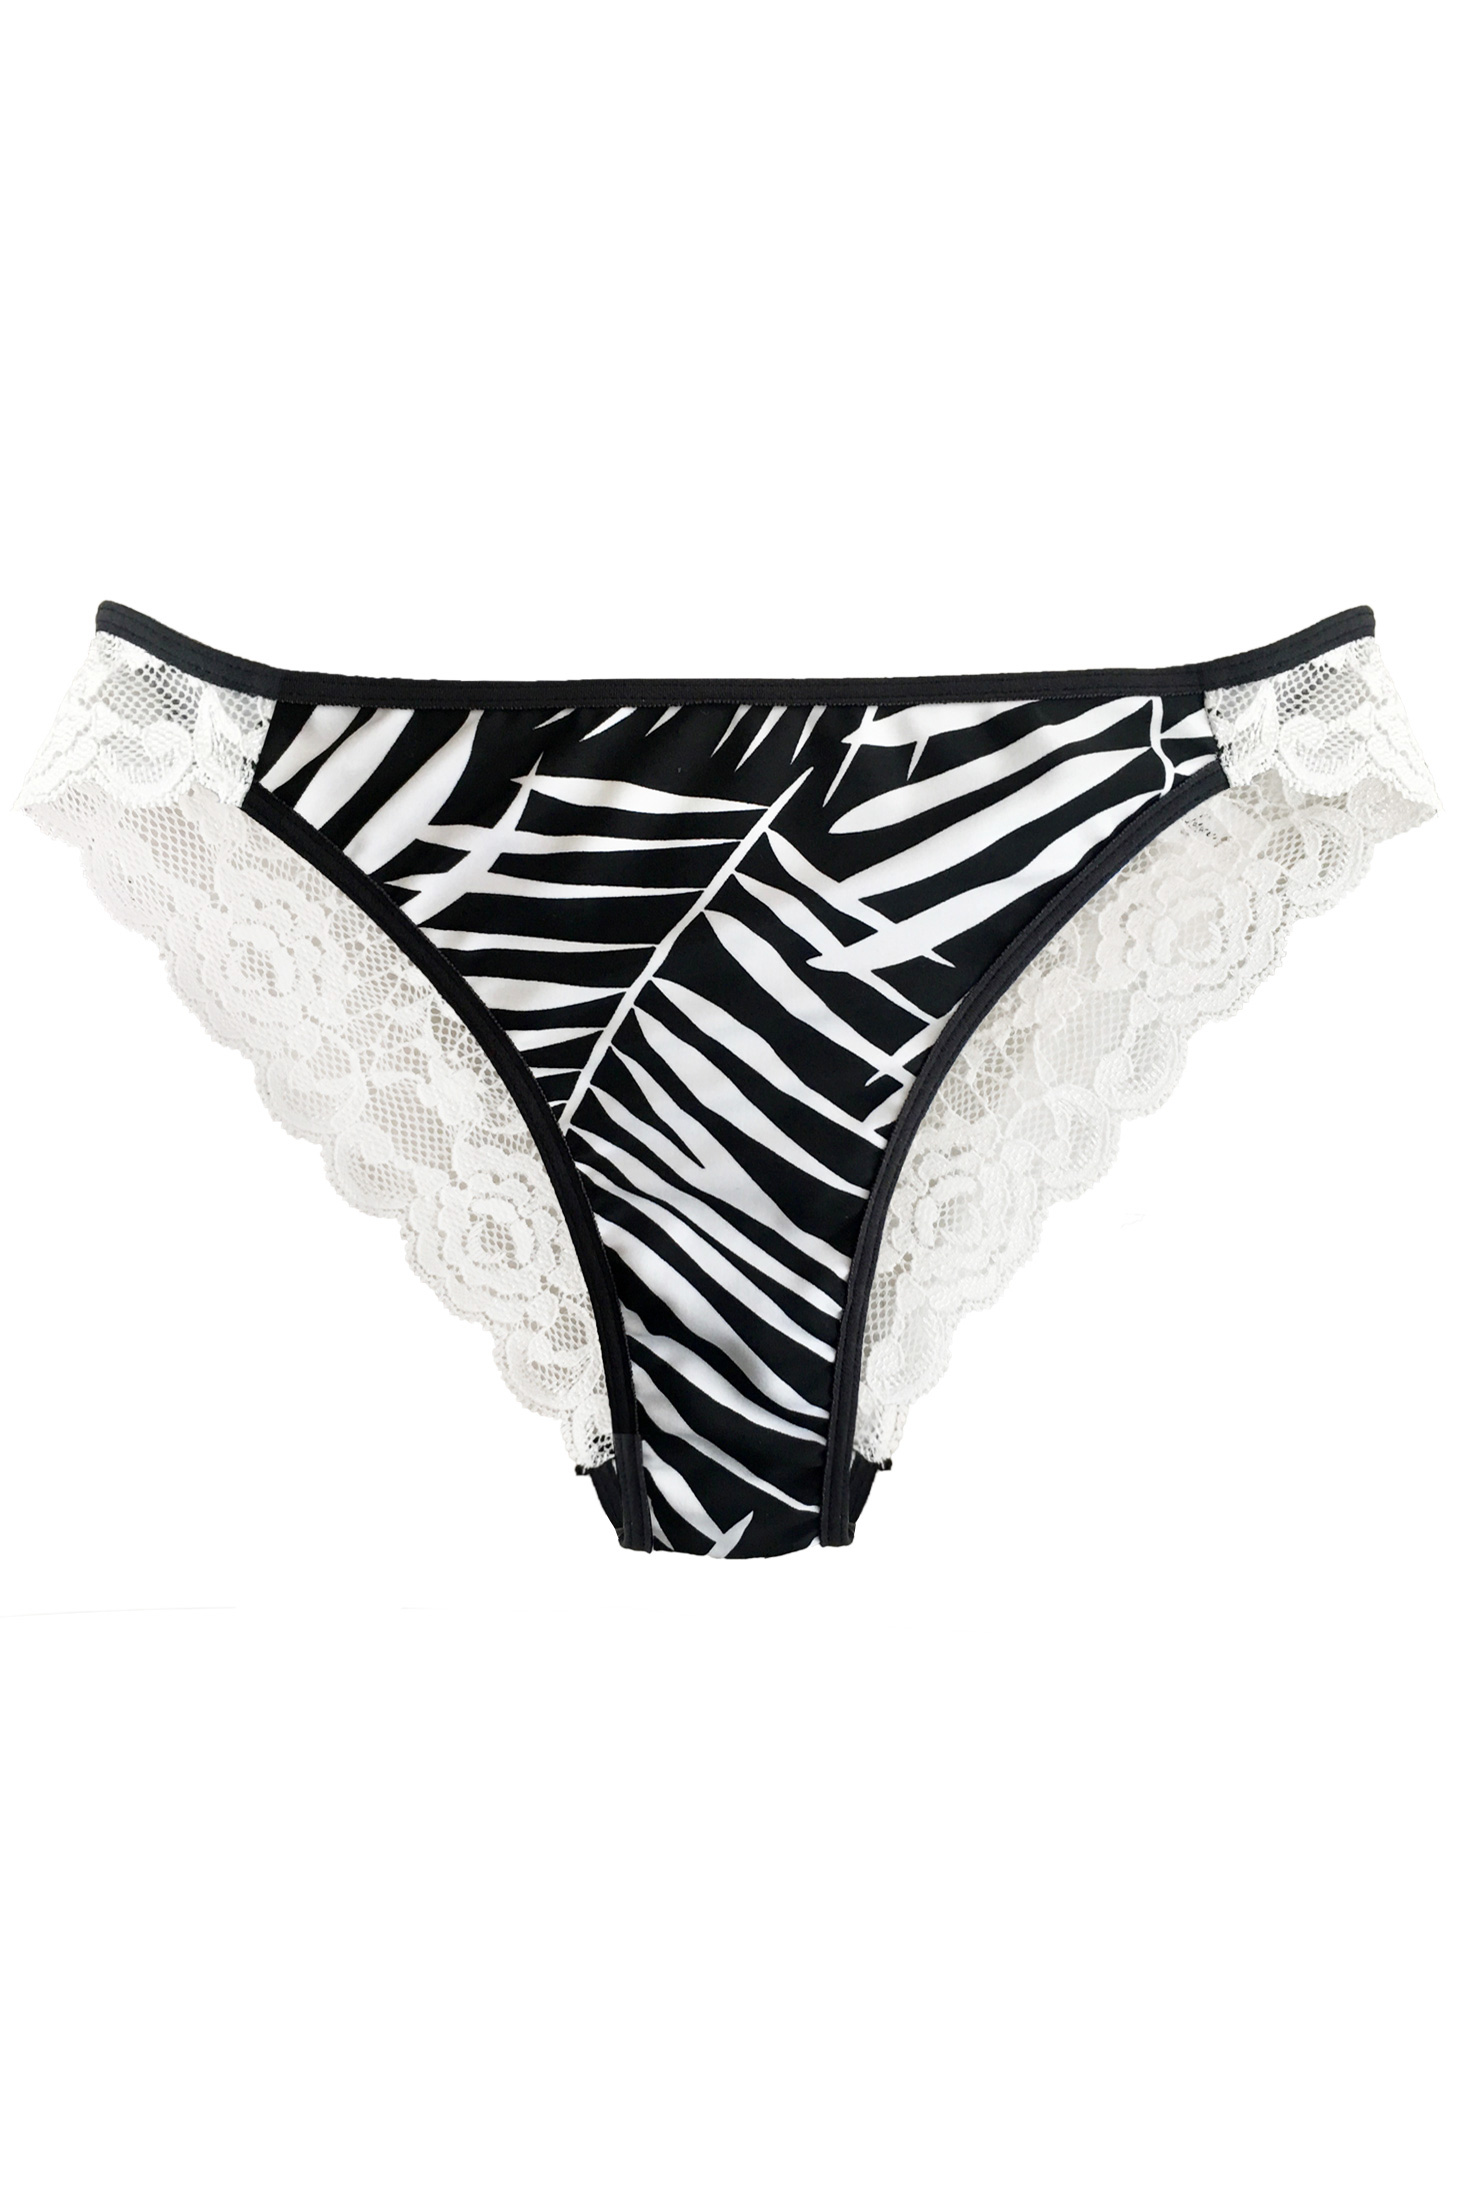 Lingerie Letters Palm Brief - Women's Underwear Online